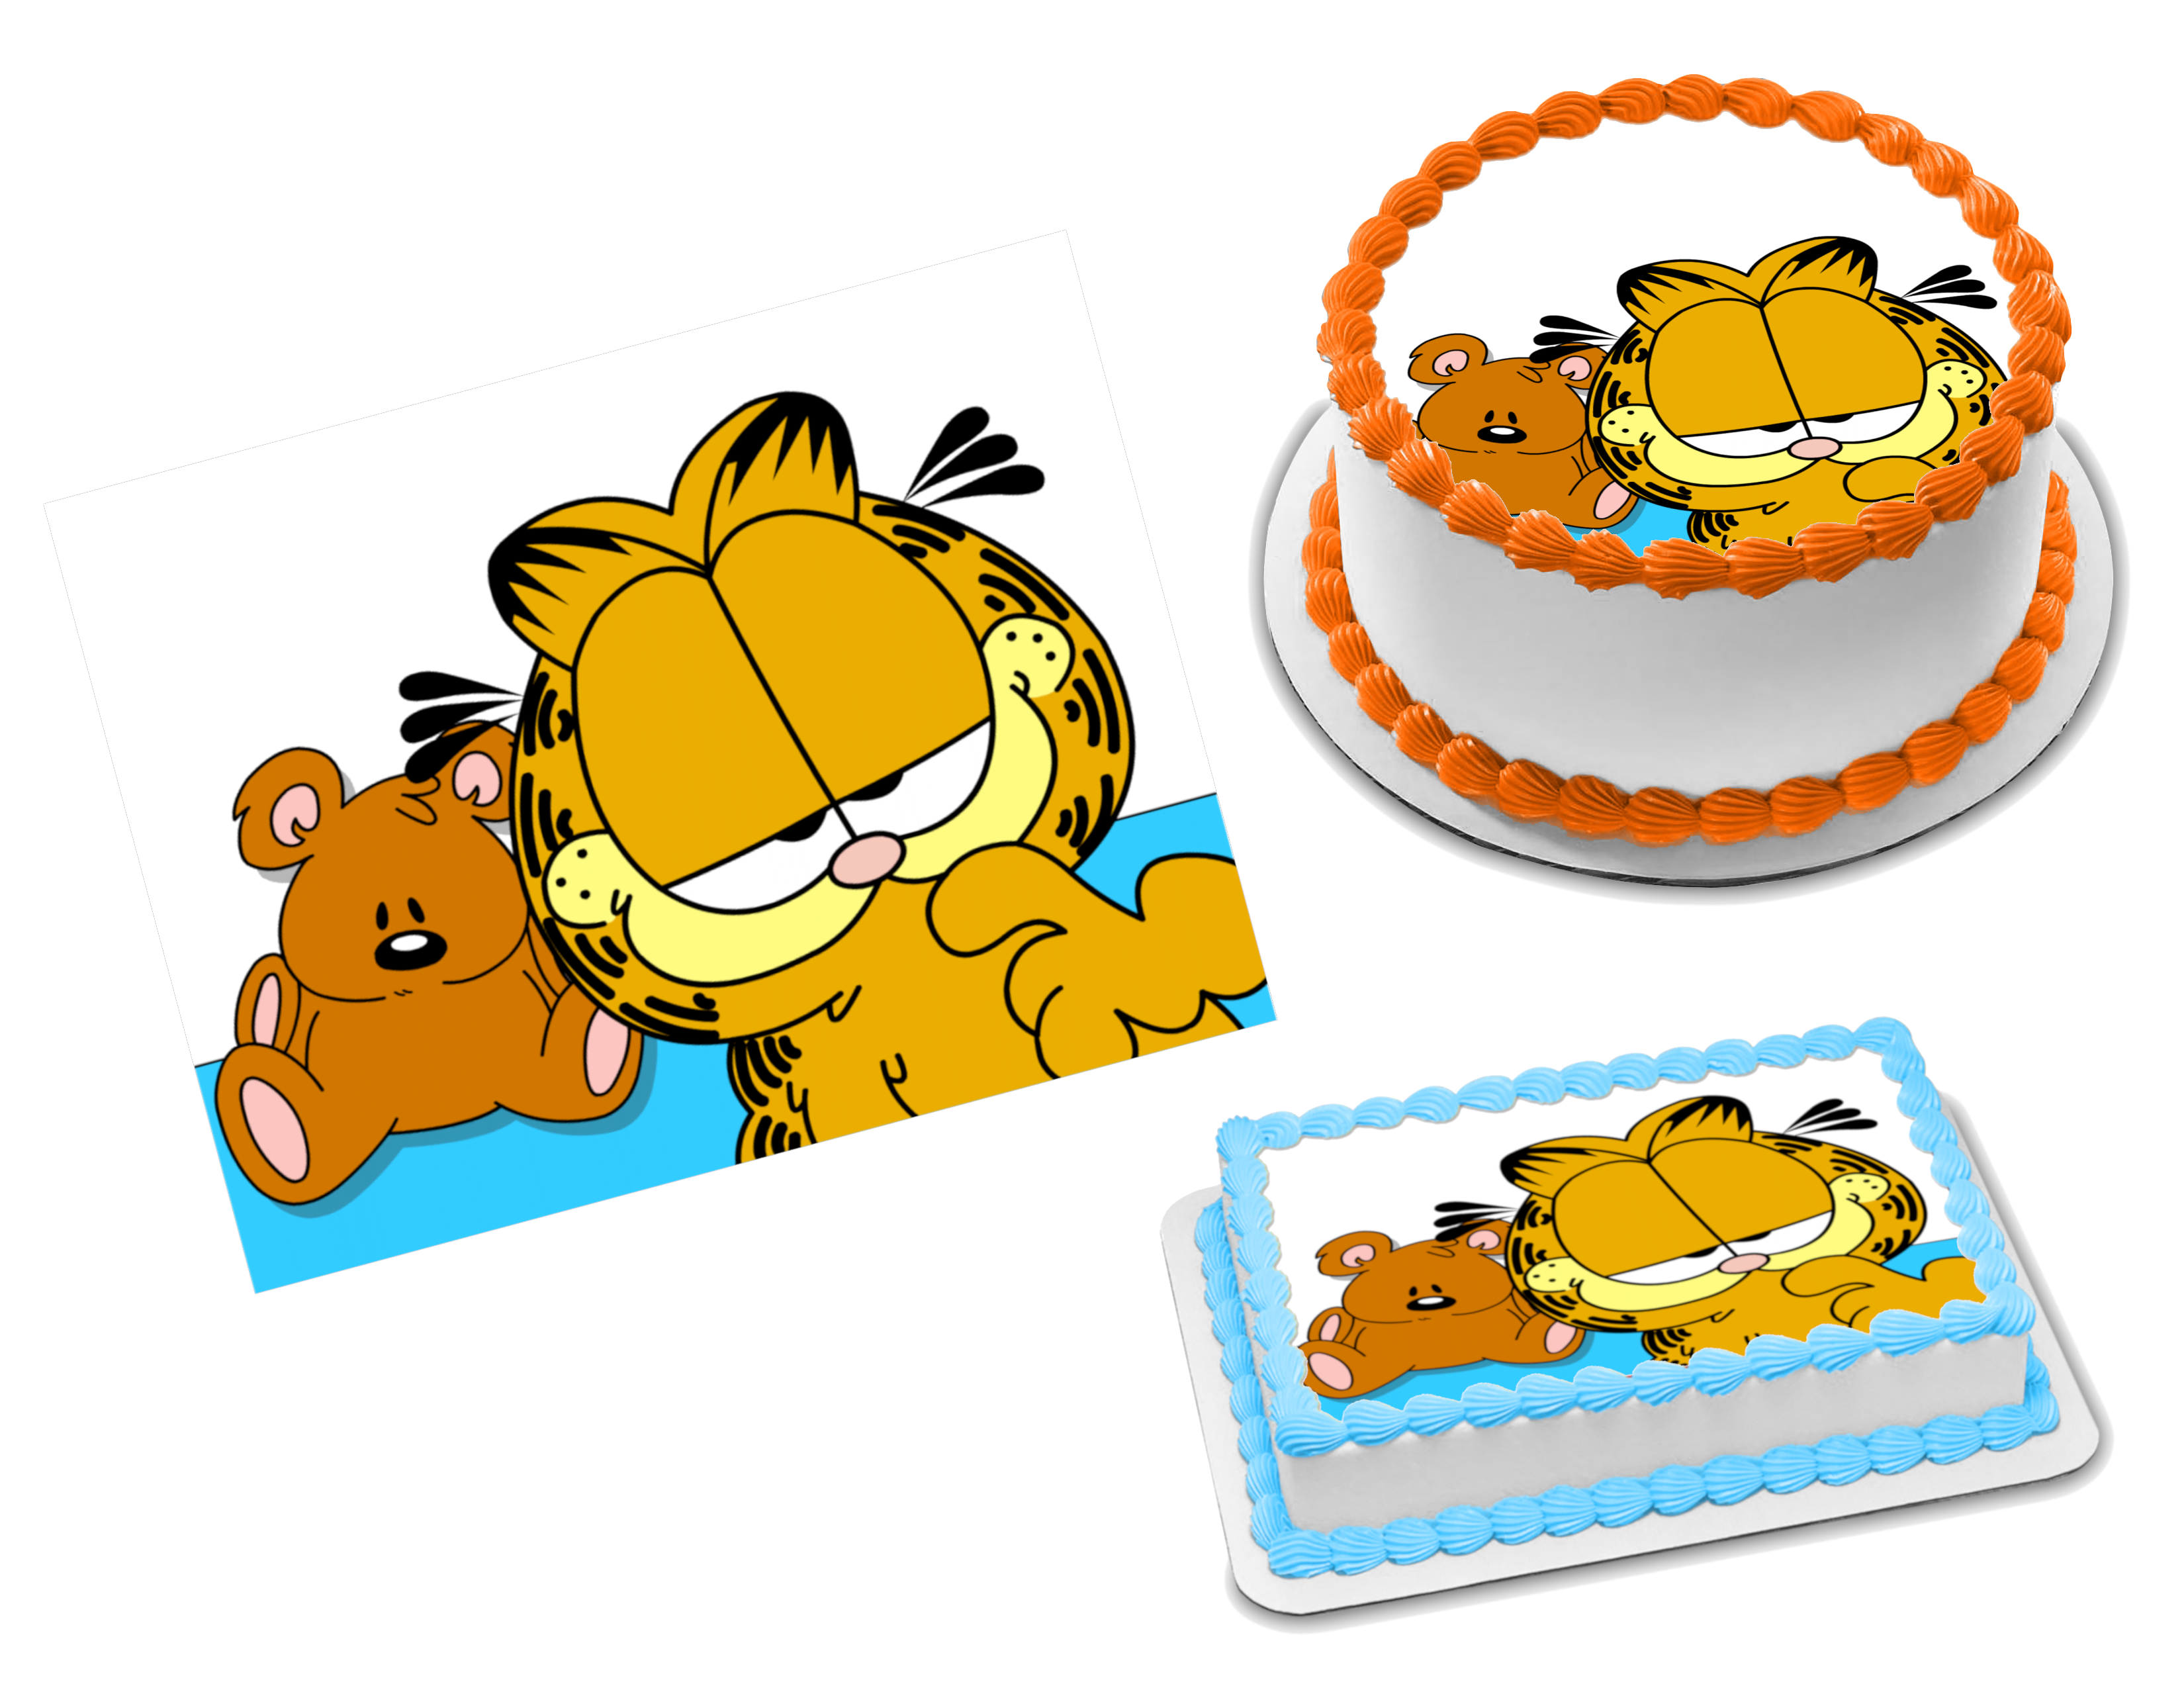 Garfield Cat Face Designer Cake Delivery in Delhi NCR - ₹1,649.00 Cake  Express